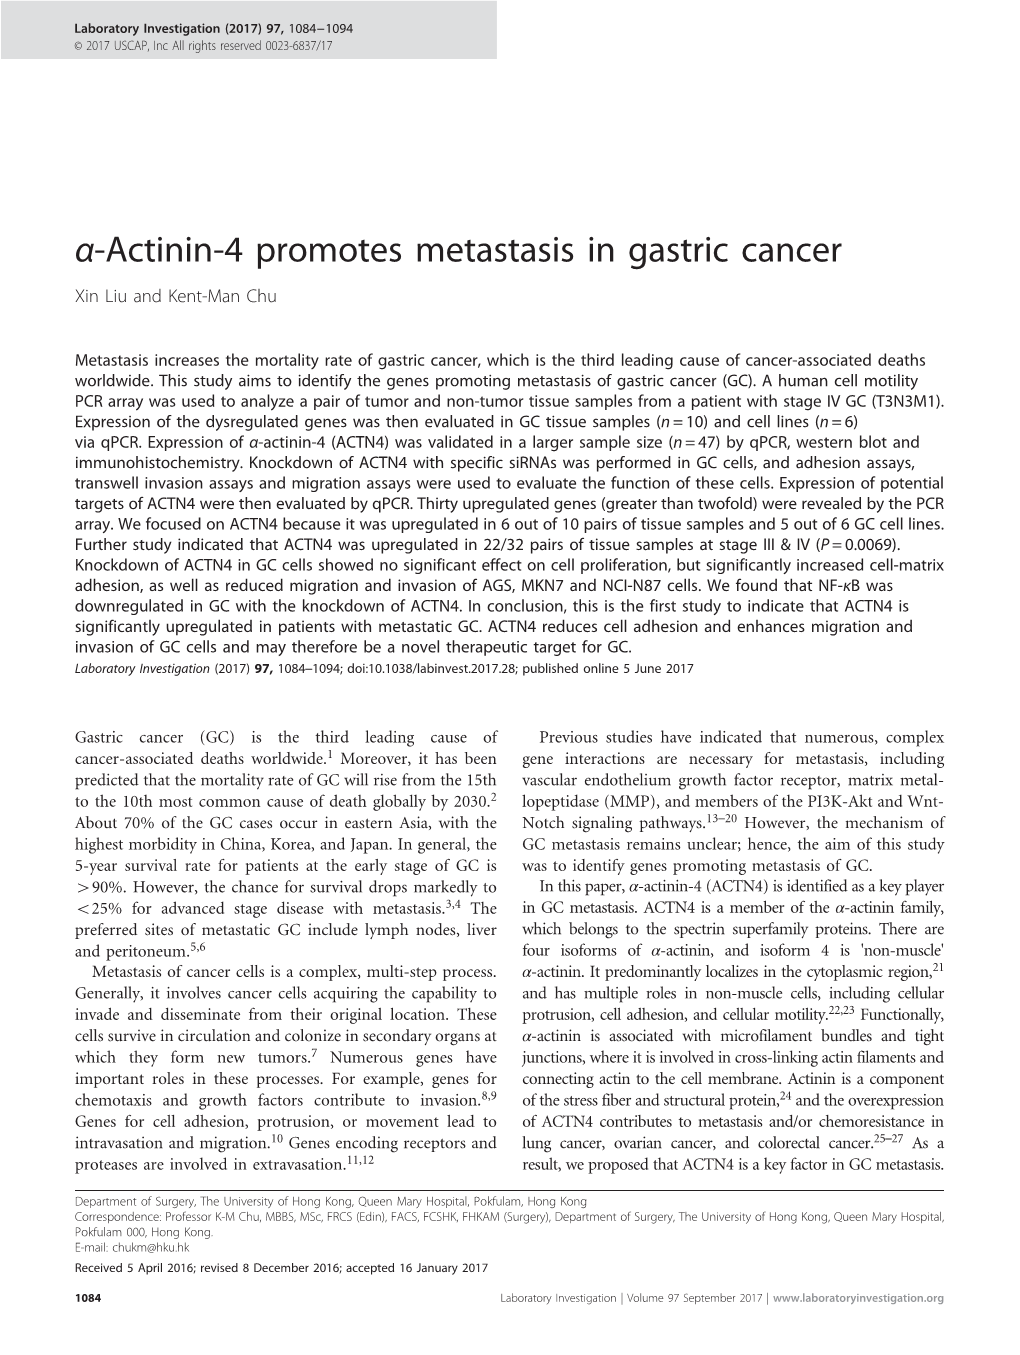 Alpha;-Actinin-4 Promotes Metastasis in Gastric Cancer